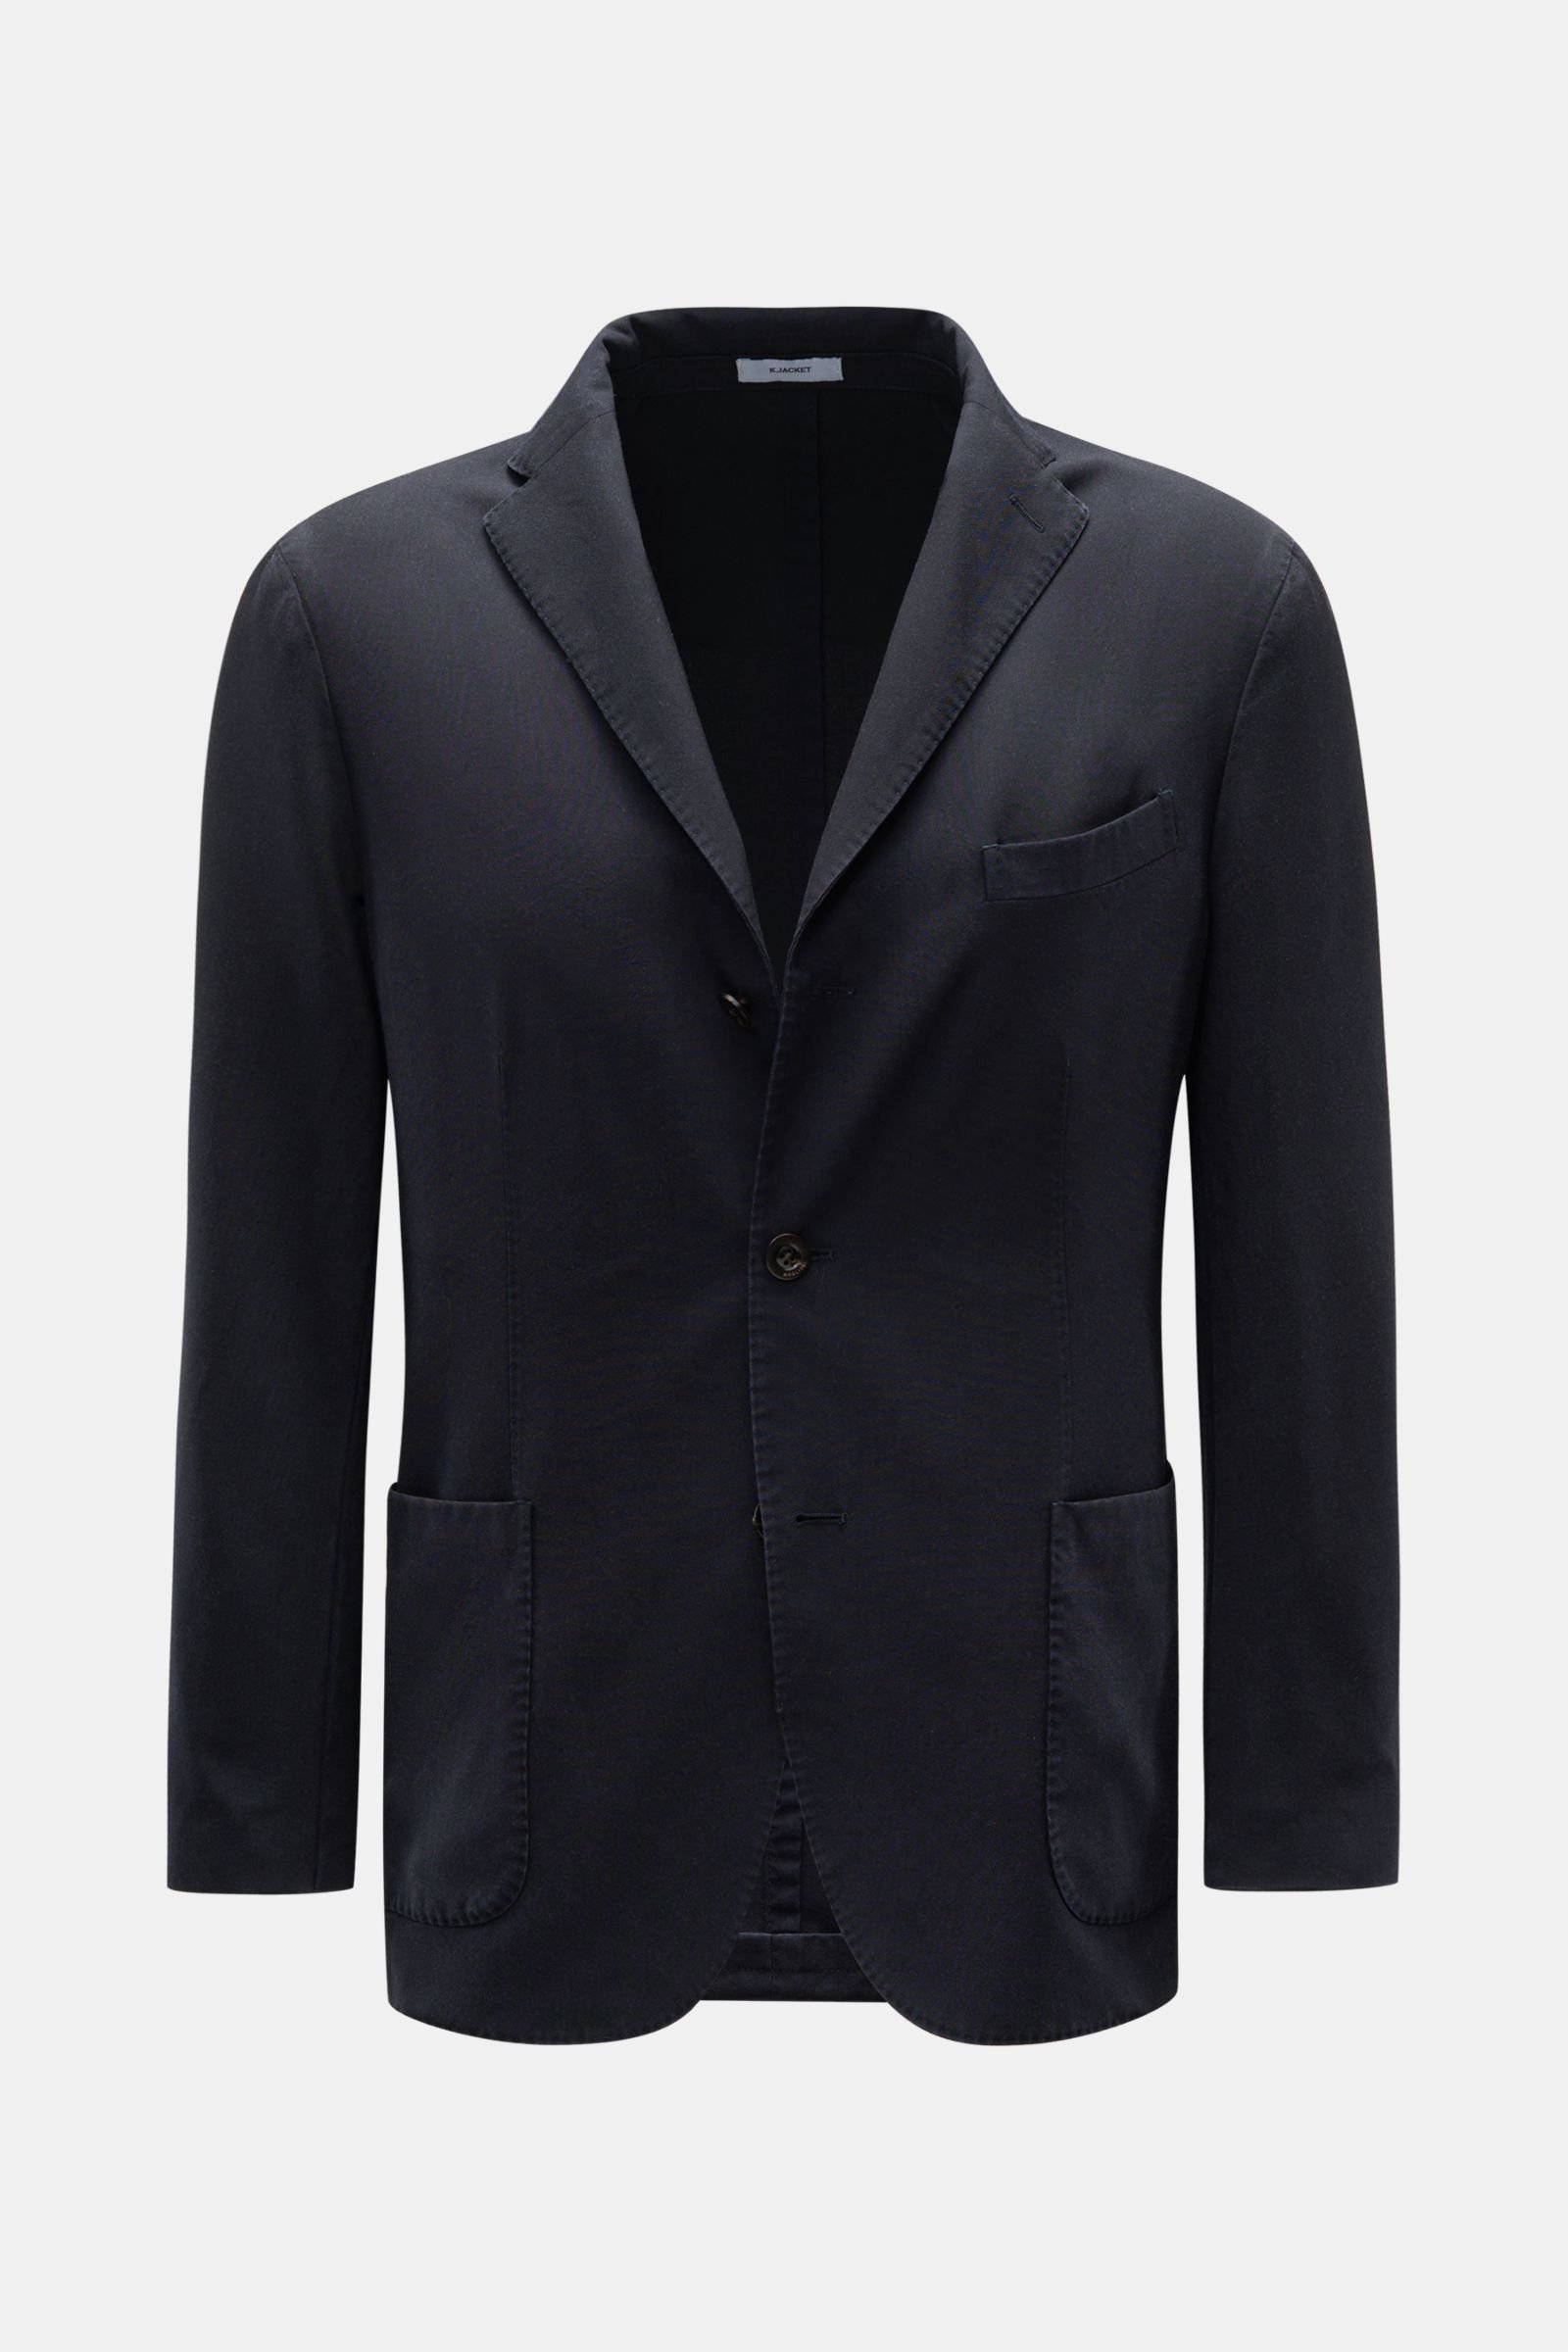 Smart-casual jacket 'K. Jacket' dark navy